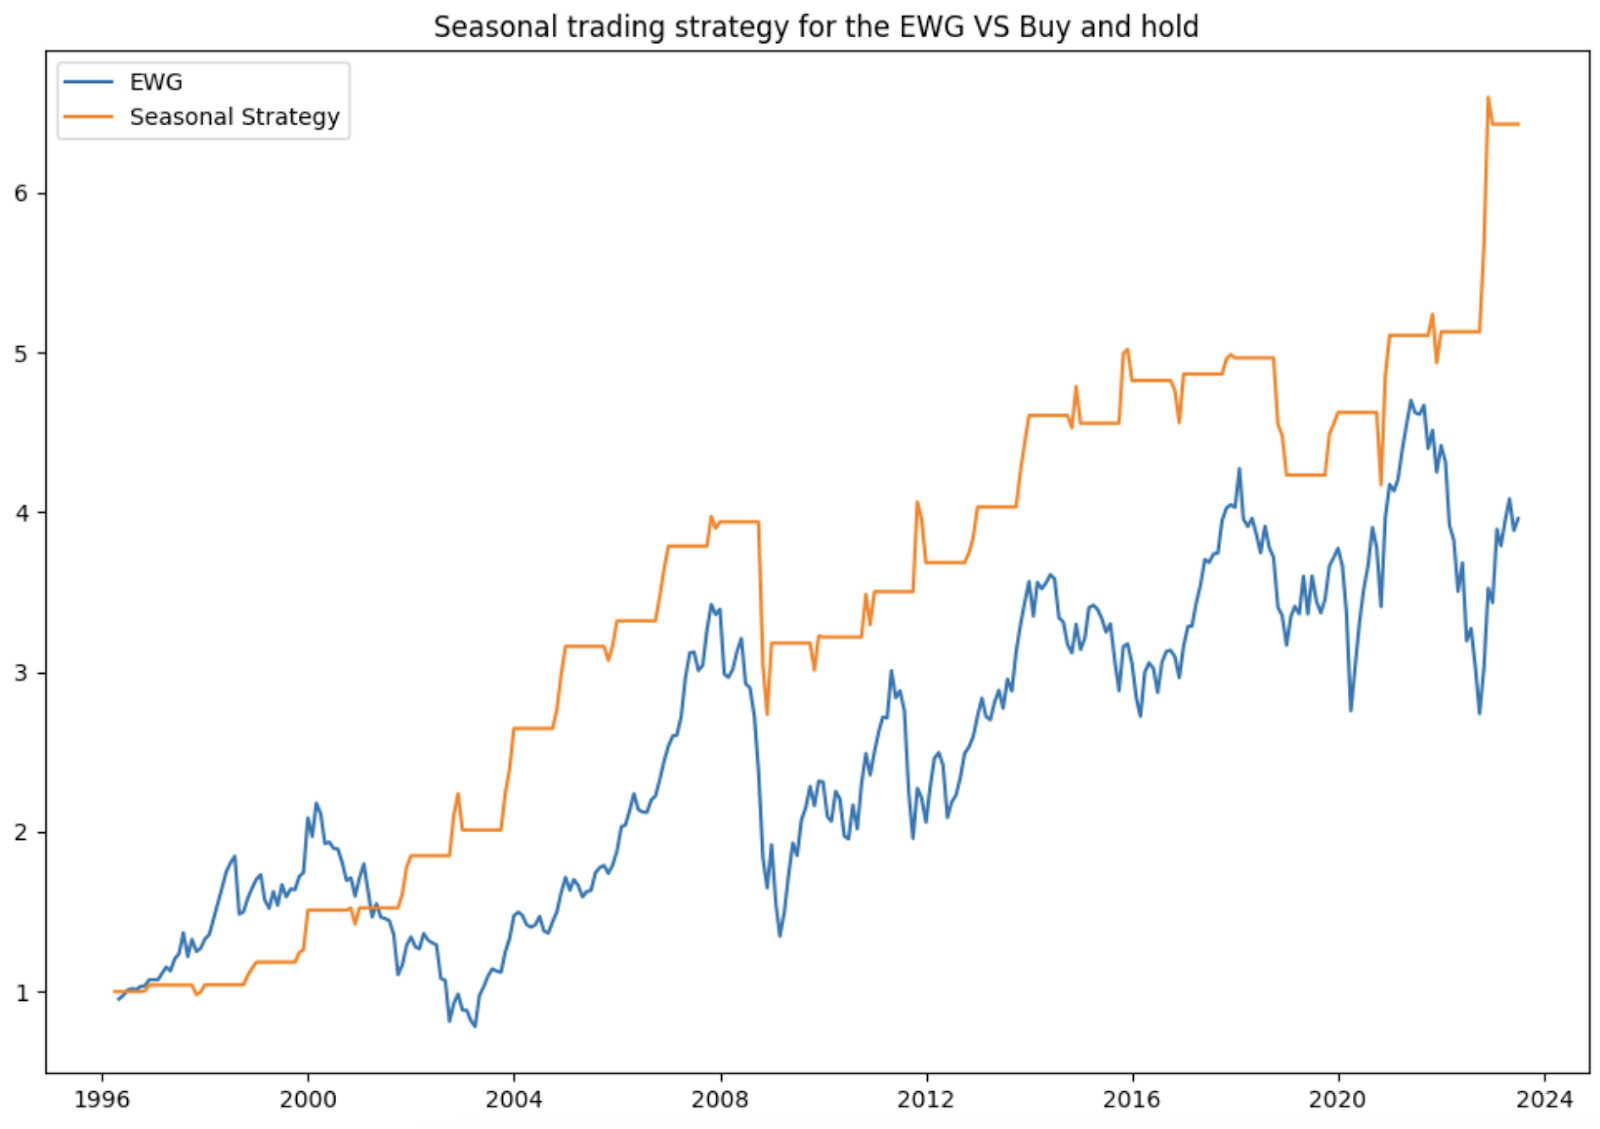 Seasonal trading strategy for German stocks, EWG, and DAX